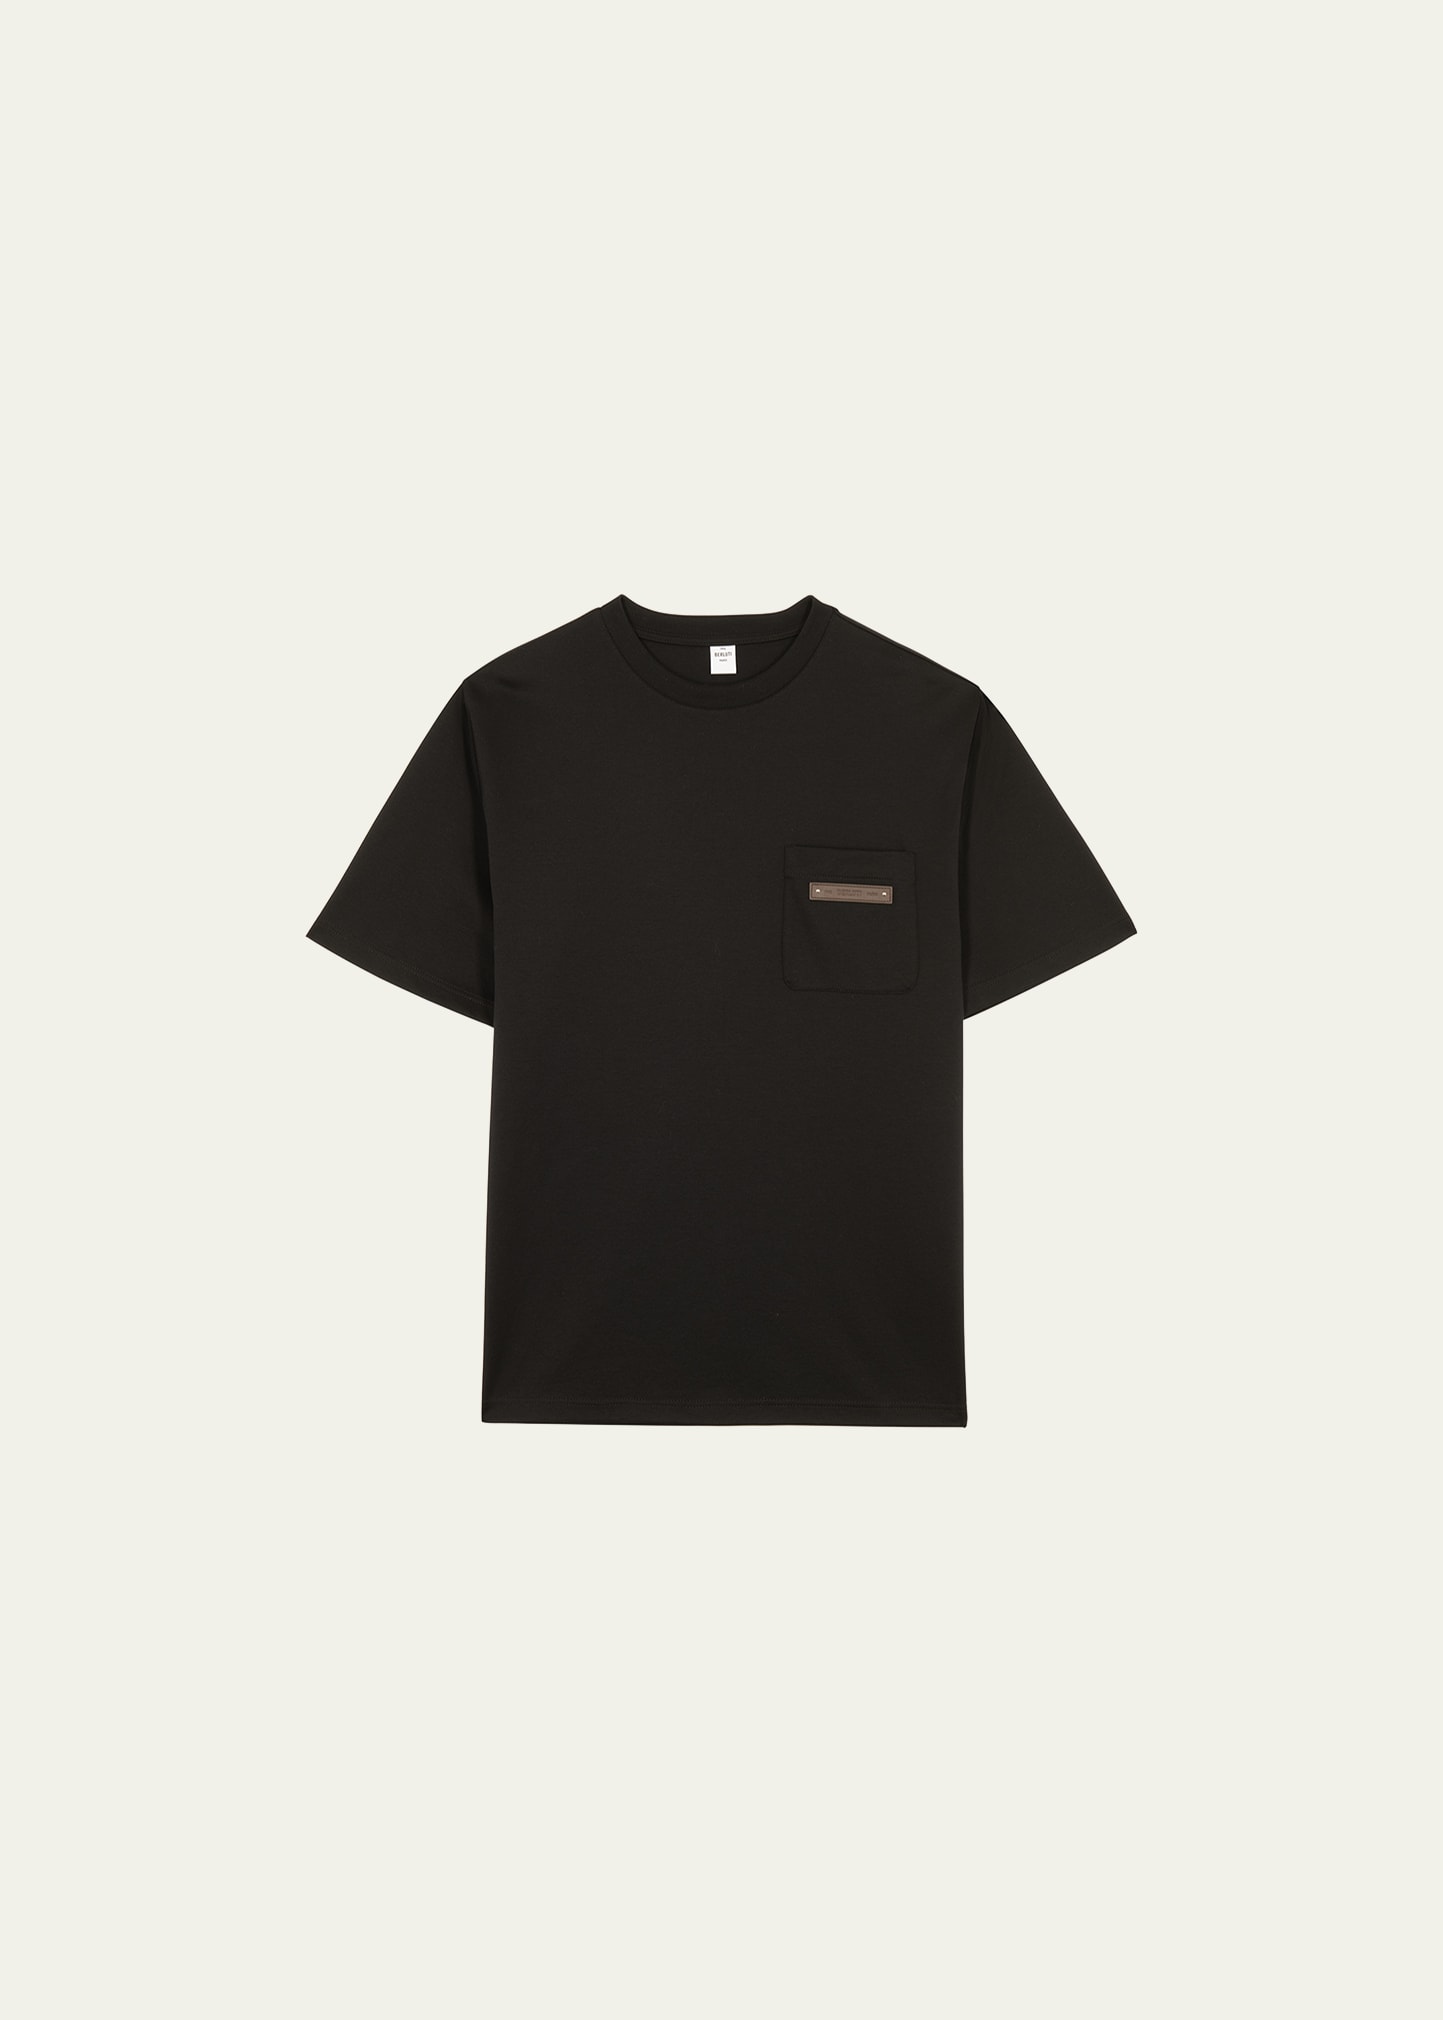 Berluti Men's Leather Tab T-Shirt